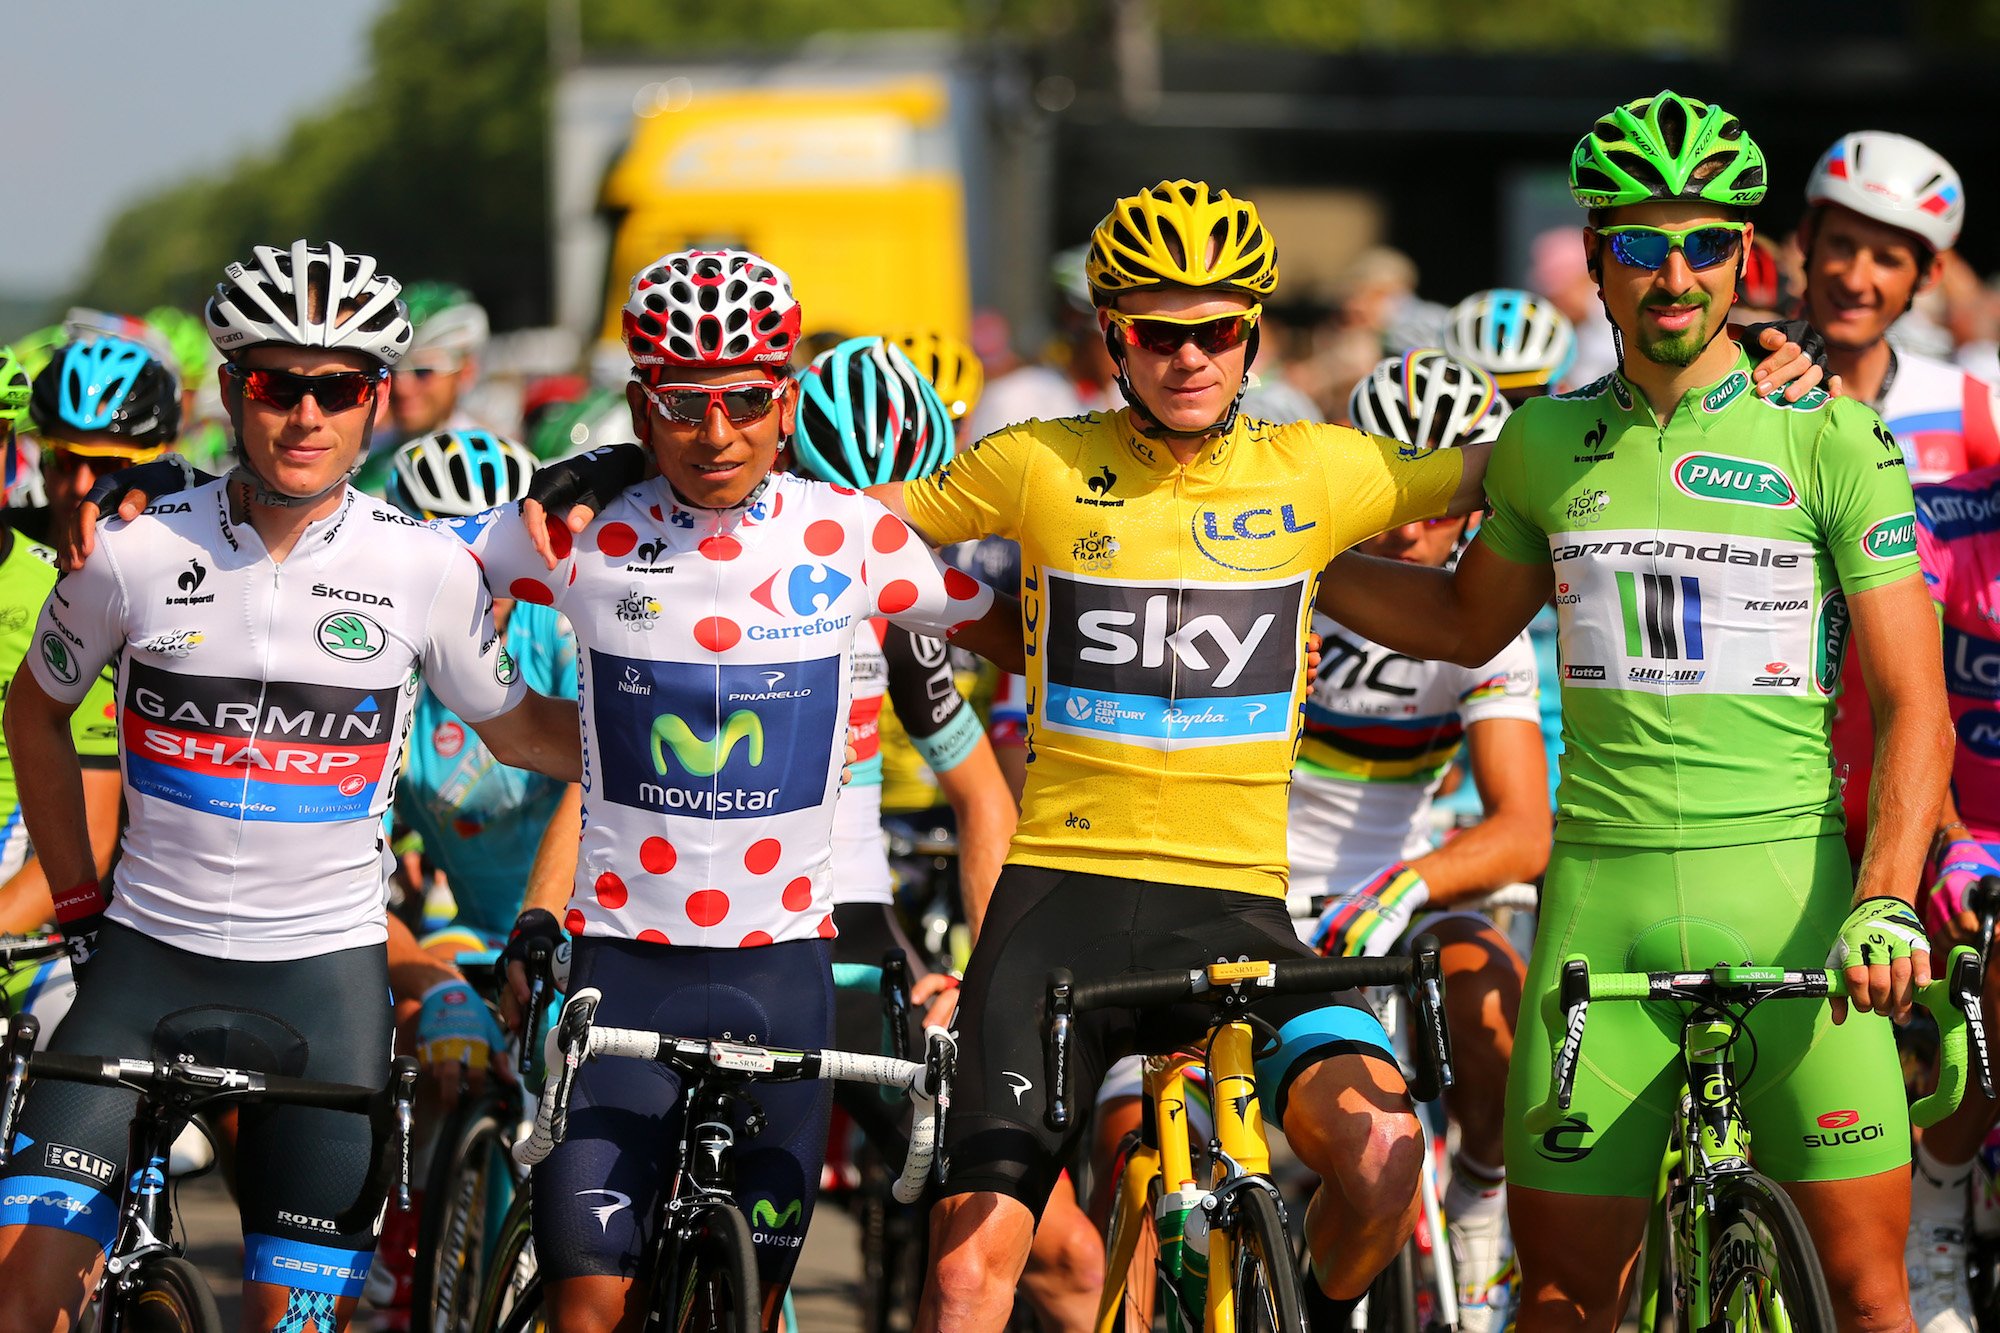 Continental is Official Partner of Tour de France